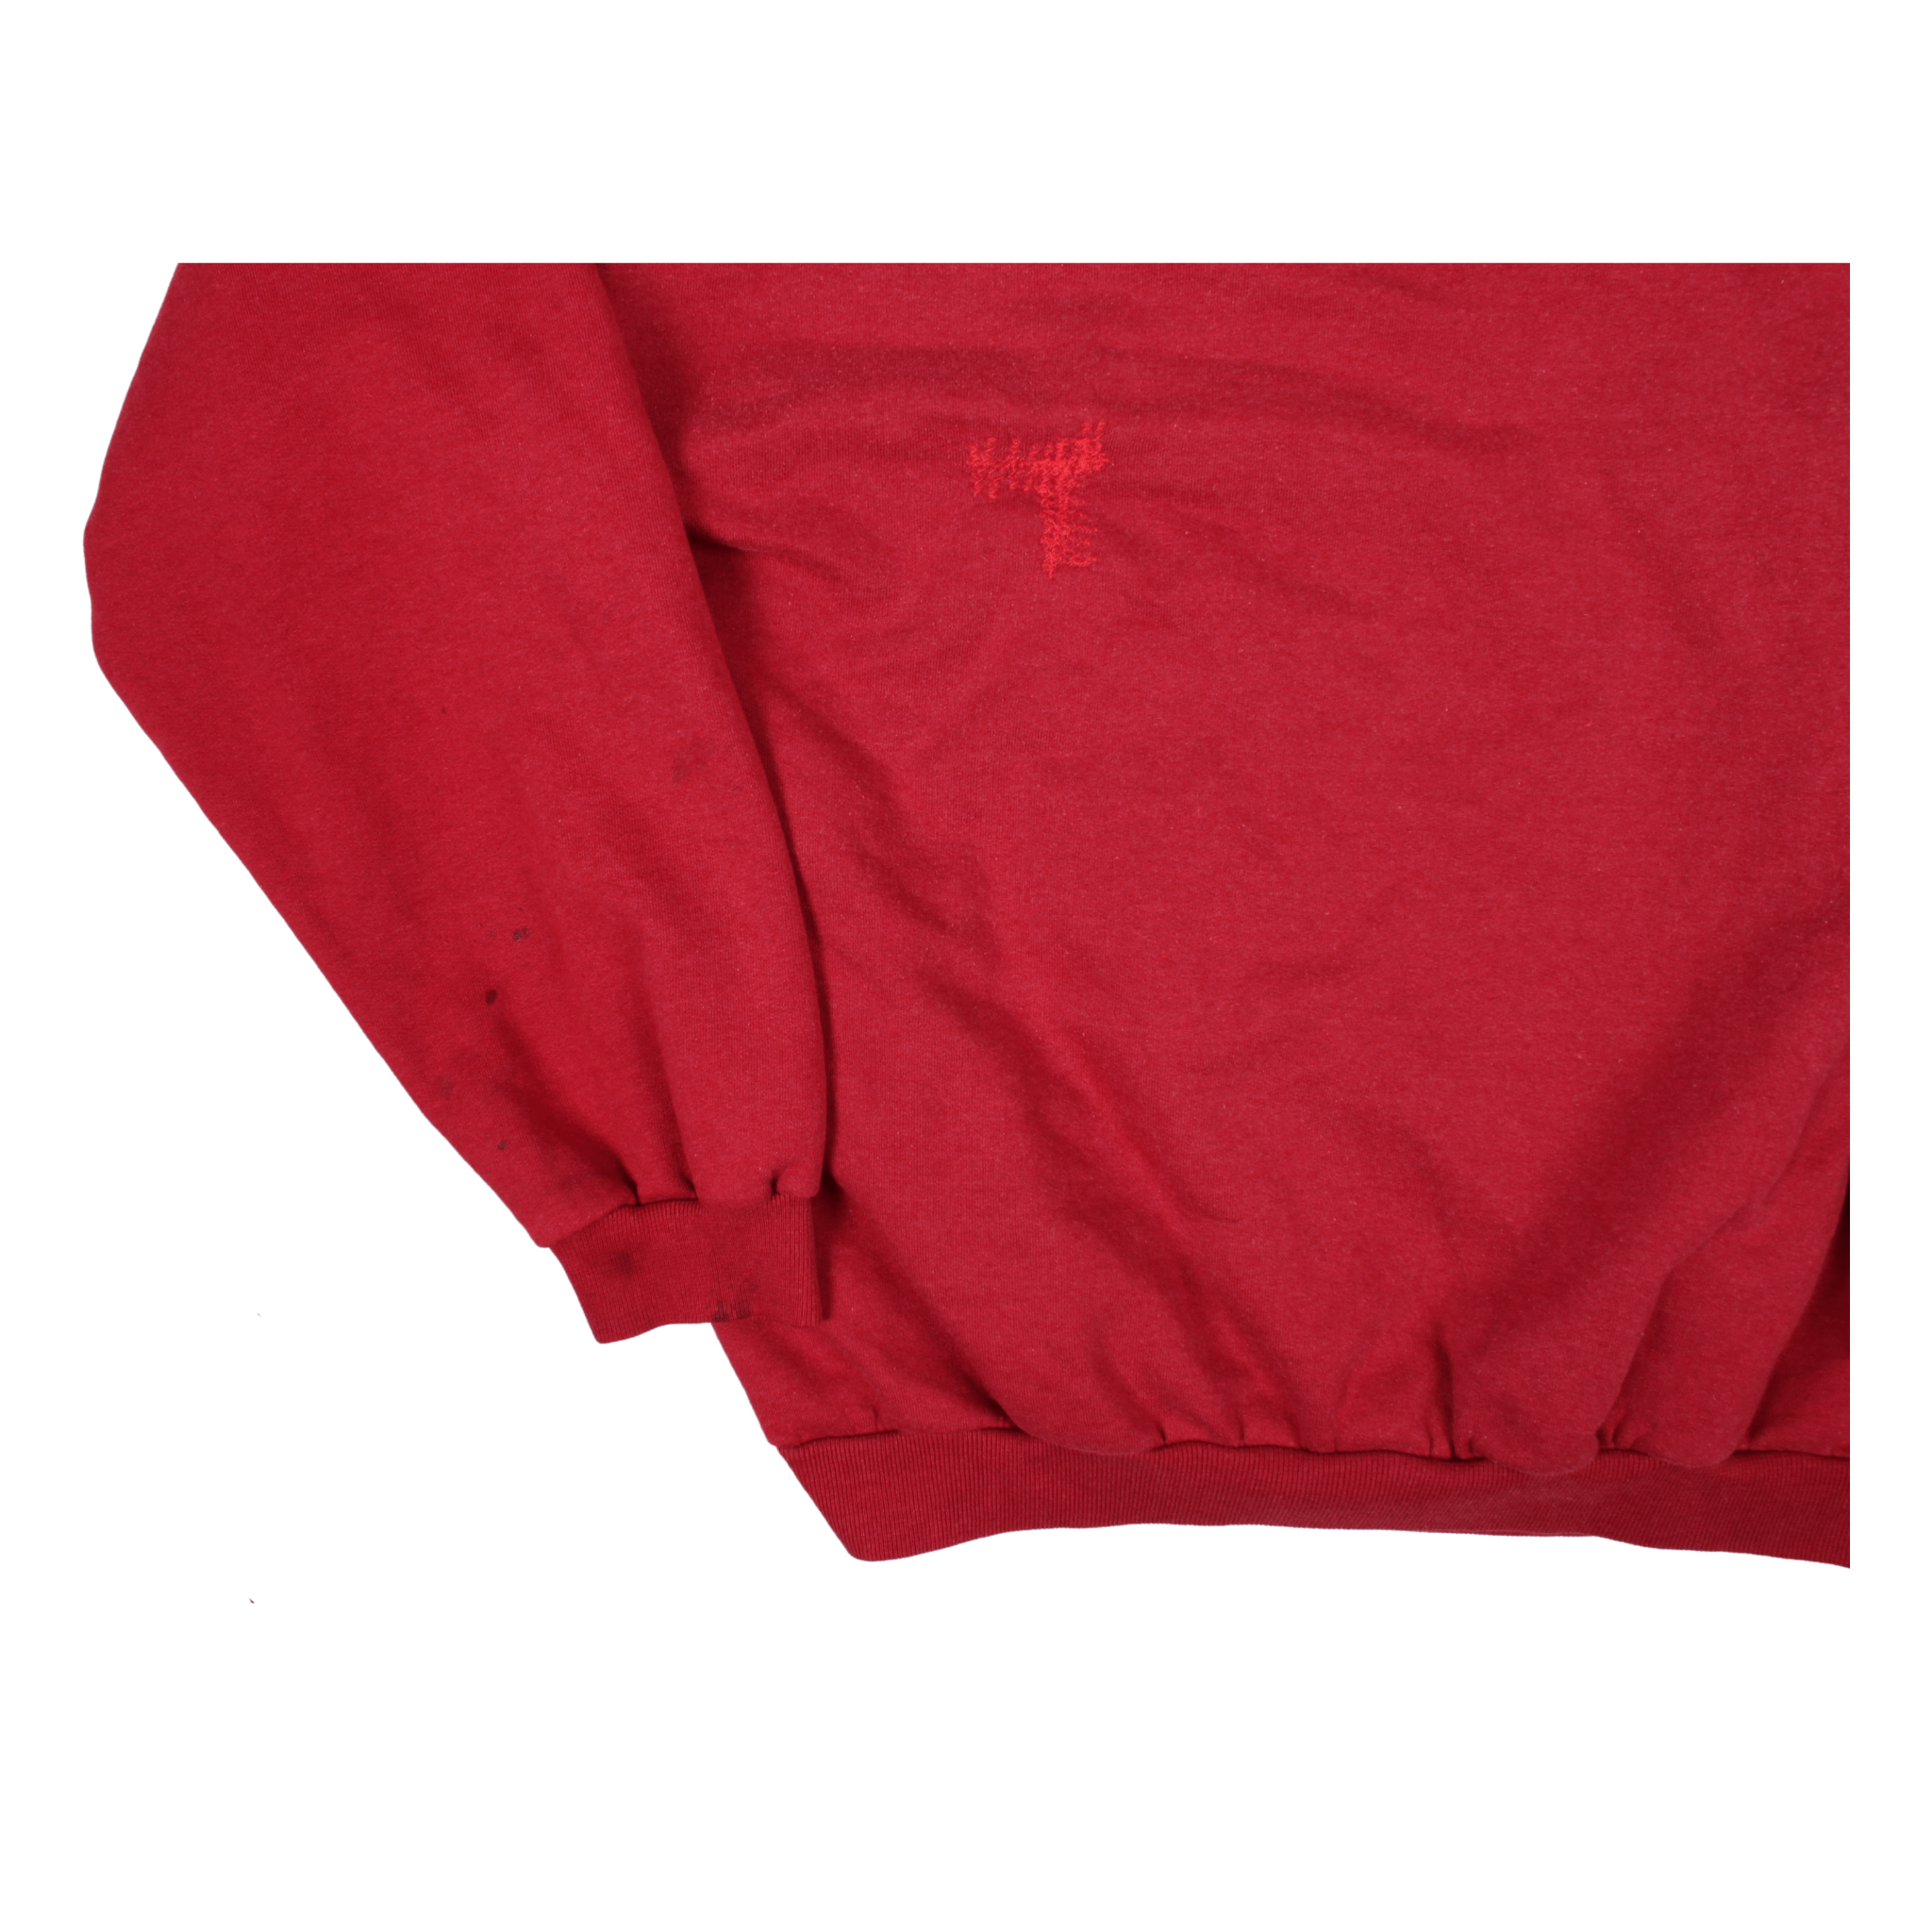 Vintage Wrangler Sweatshirt (L)